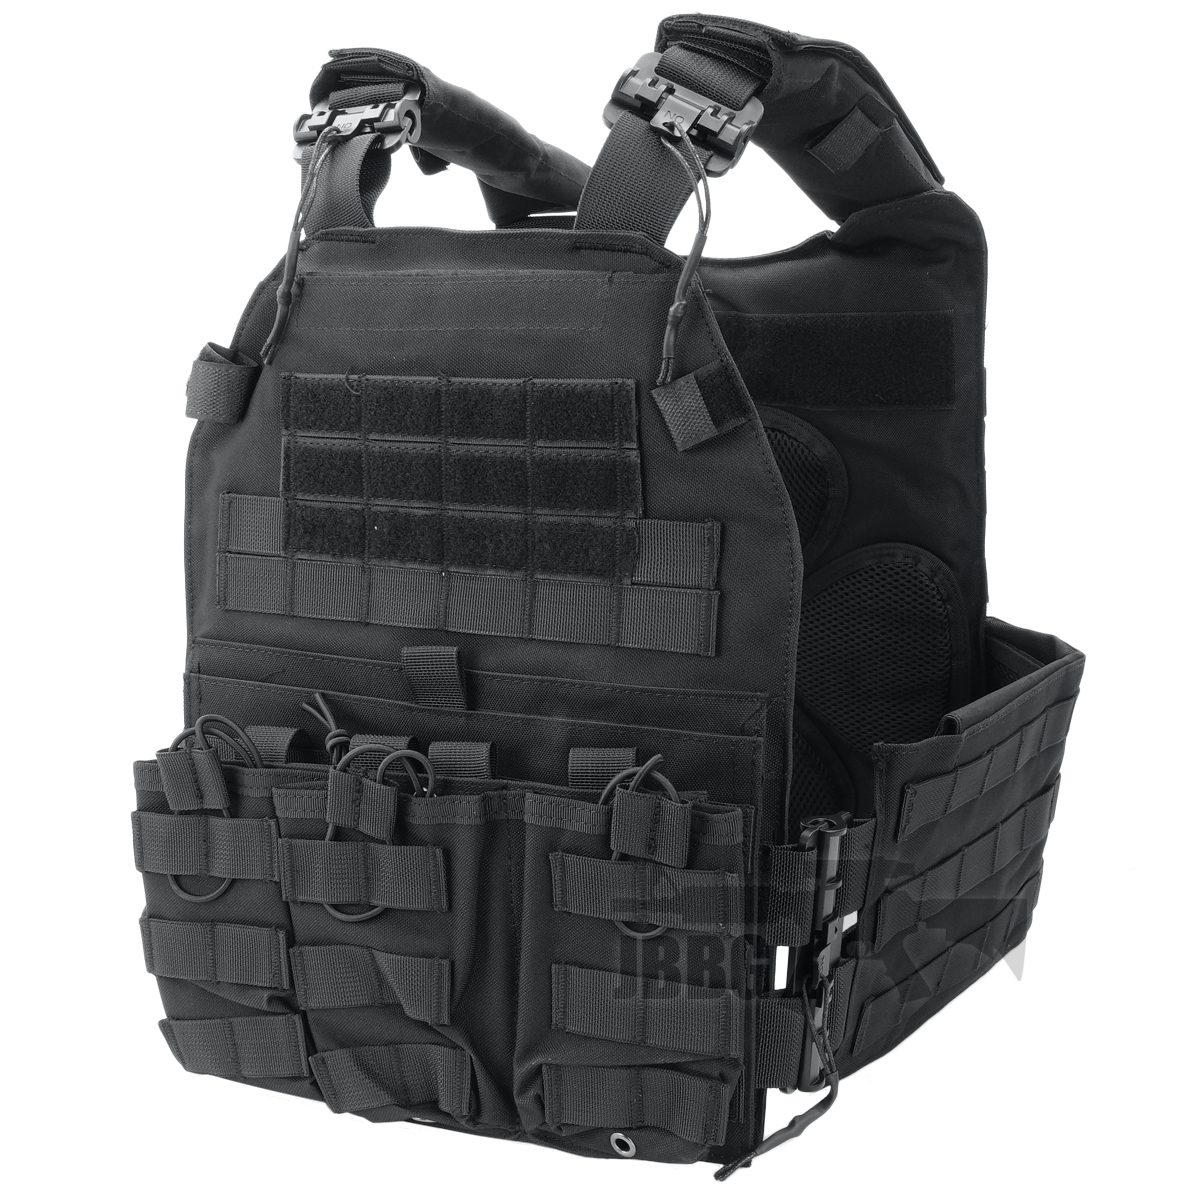 Trimex 0623-7 Plate Carrier Tactical Molle Vest Black - Just BB Guns